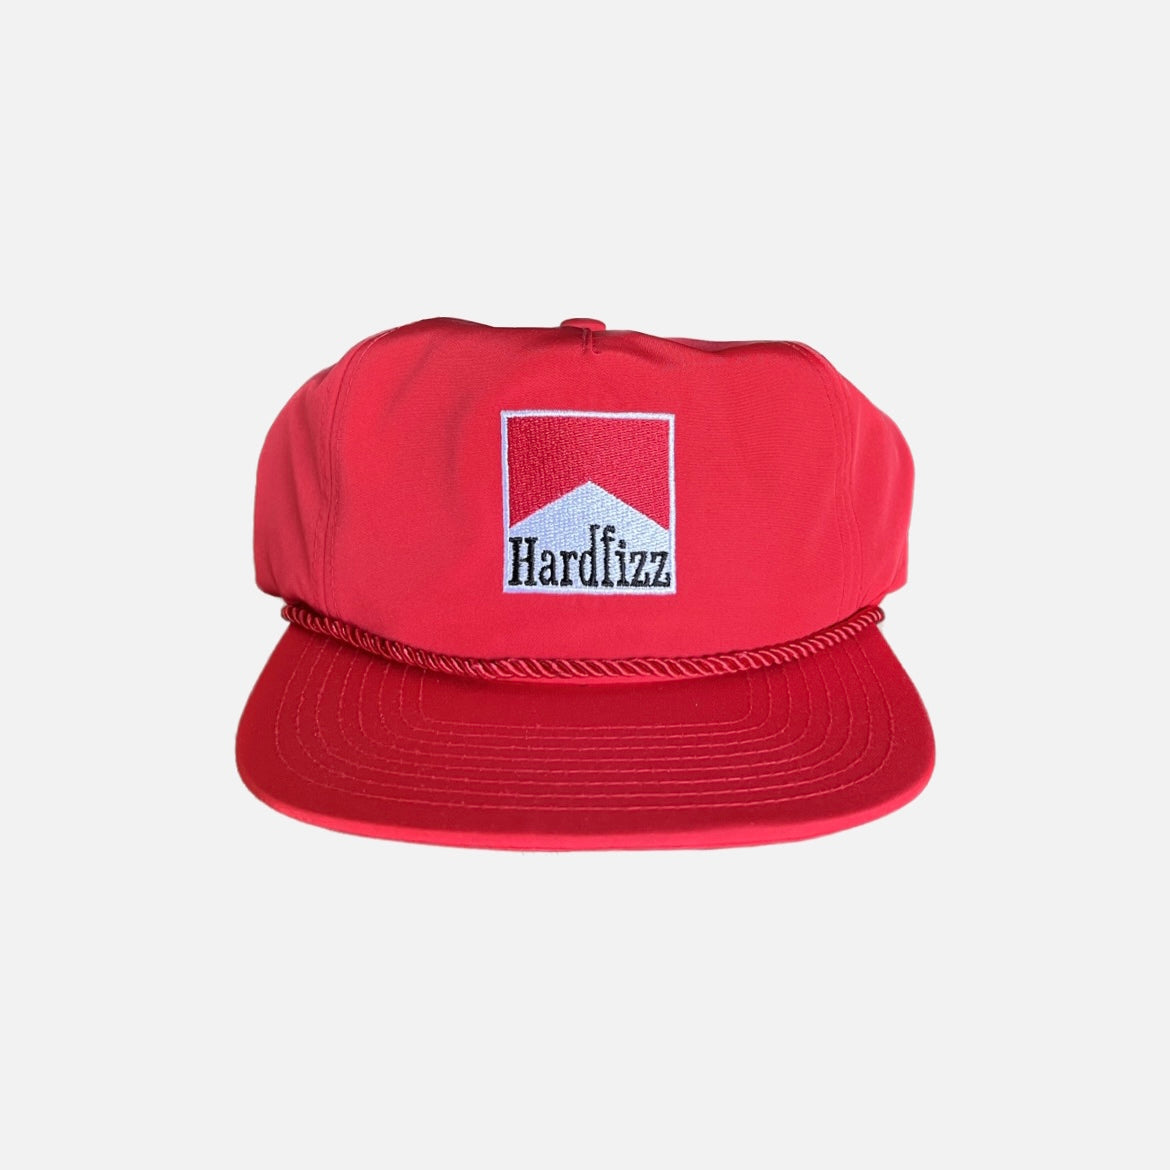 FIZZ RETRO HAT - RED